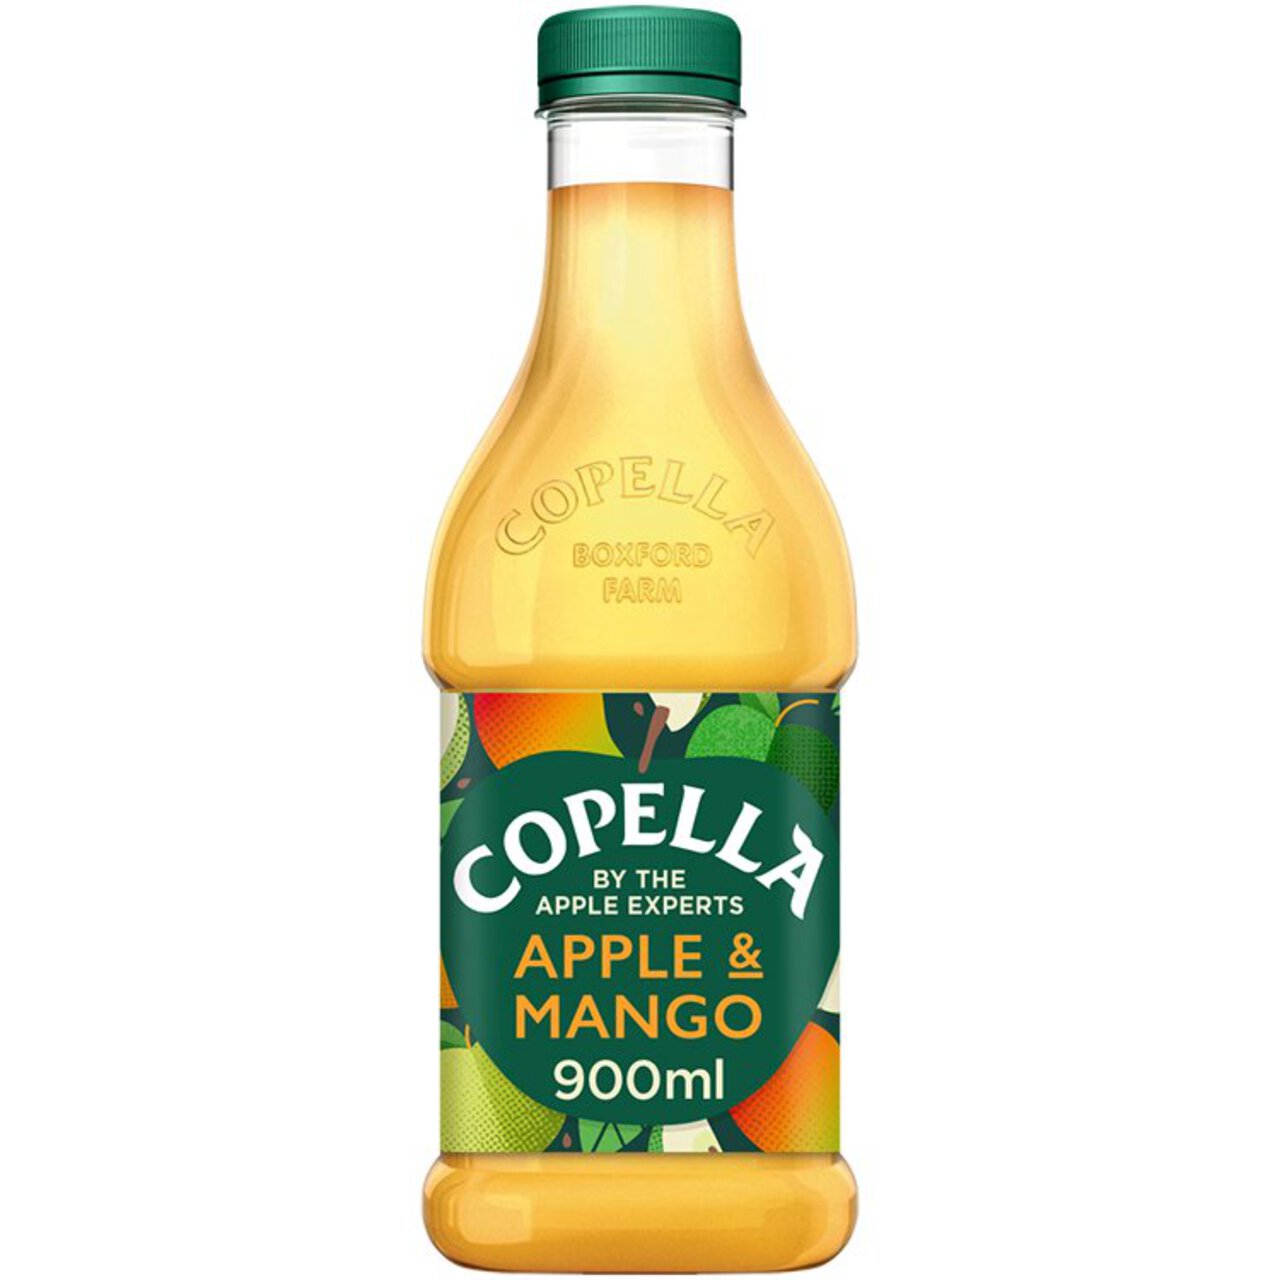 Copella Apple & Mango Juice 900ml